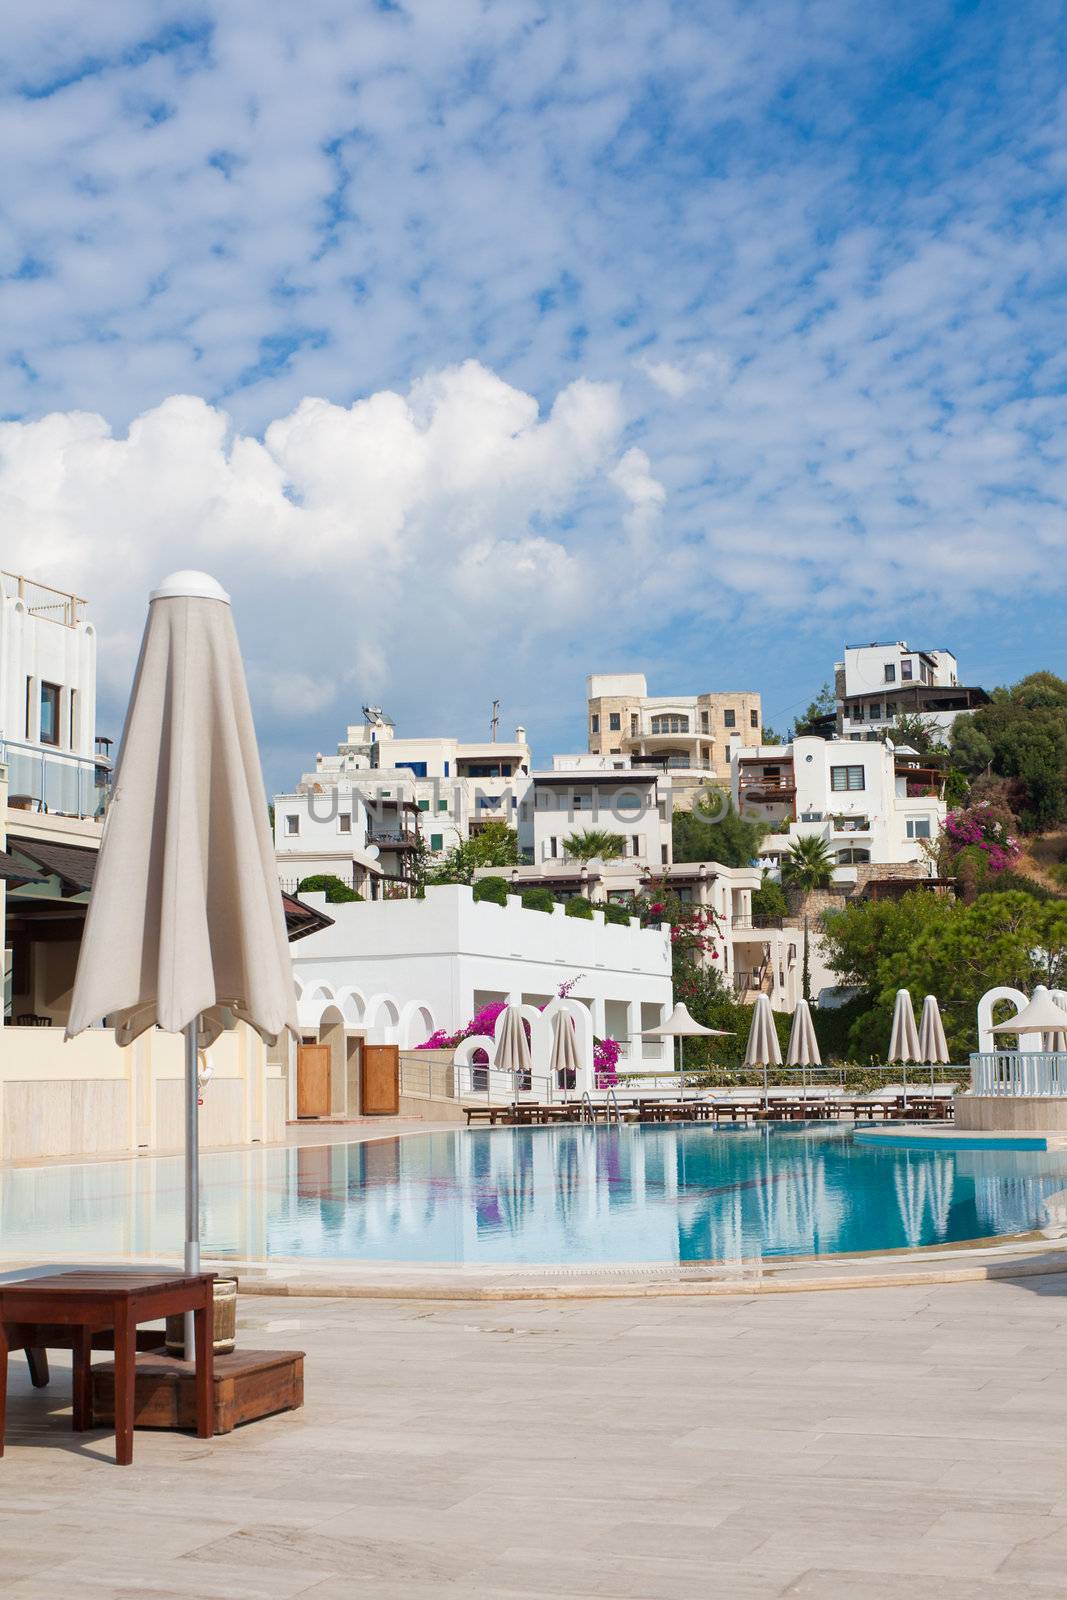 Swimming Pool of Luxury Hotel by Brigida_Soriano